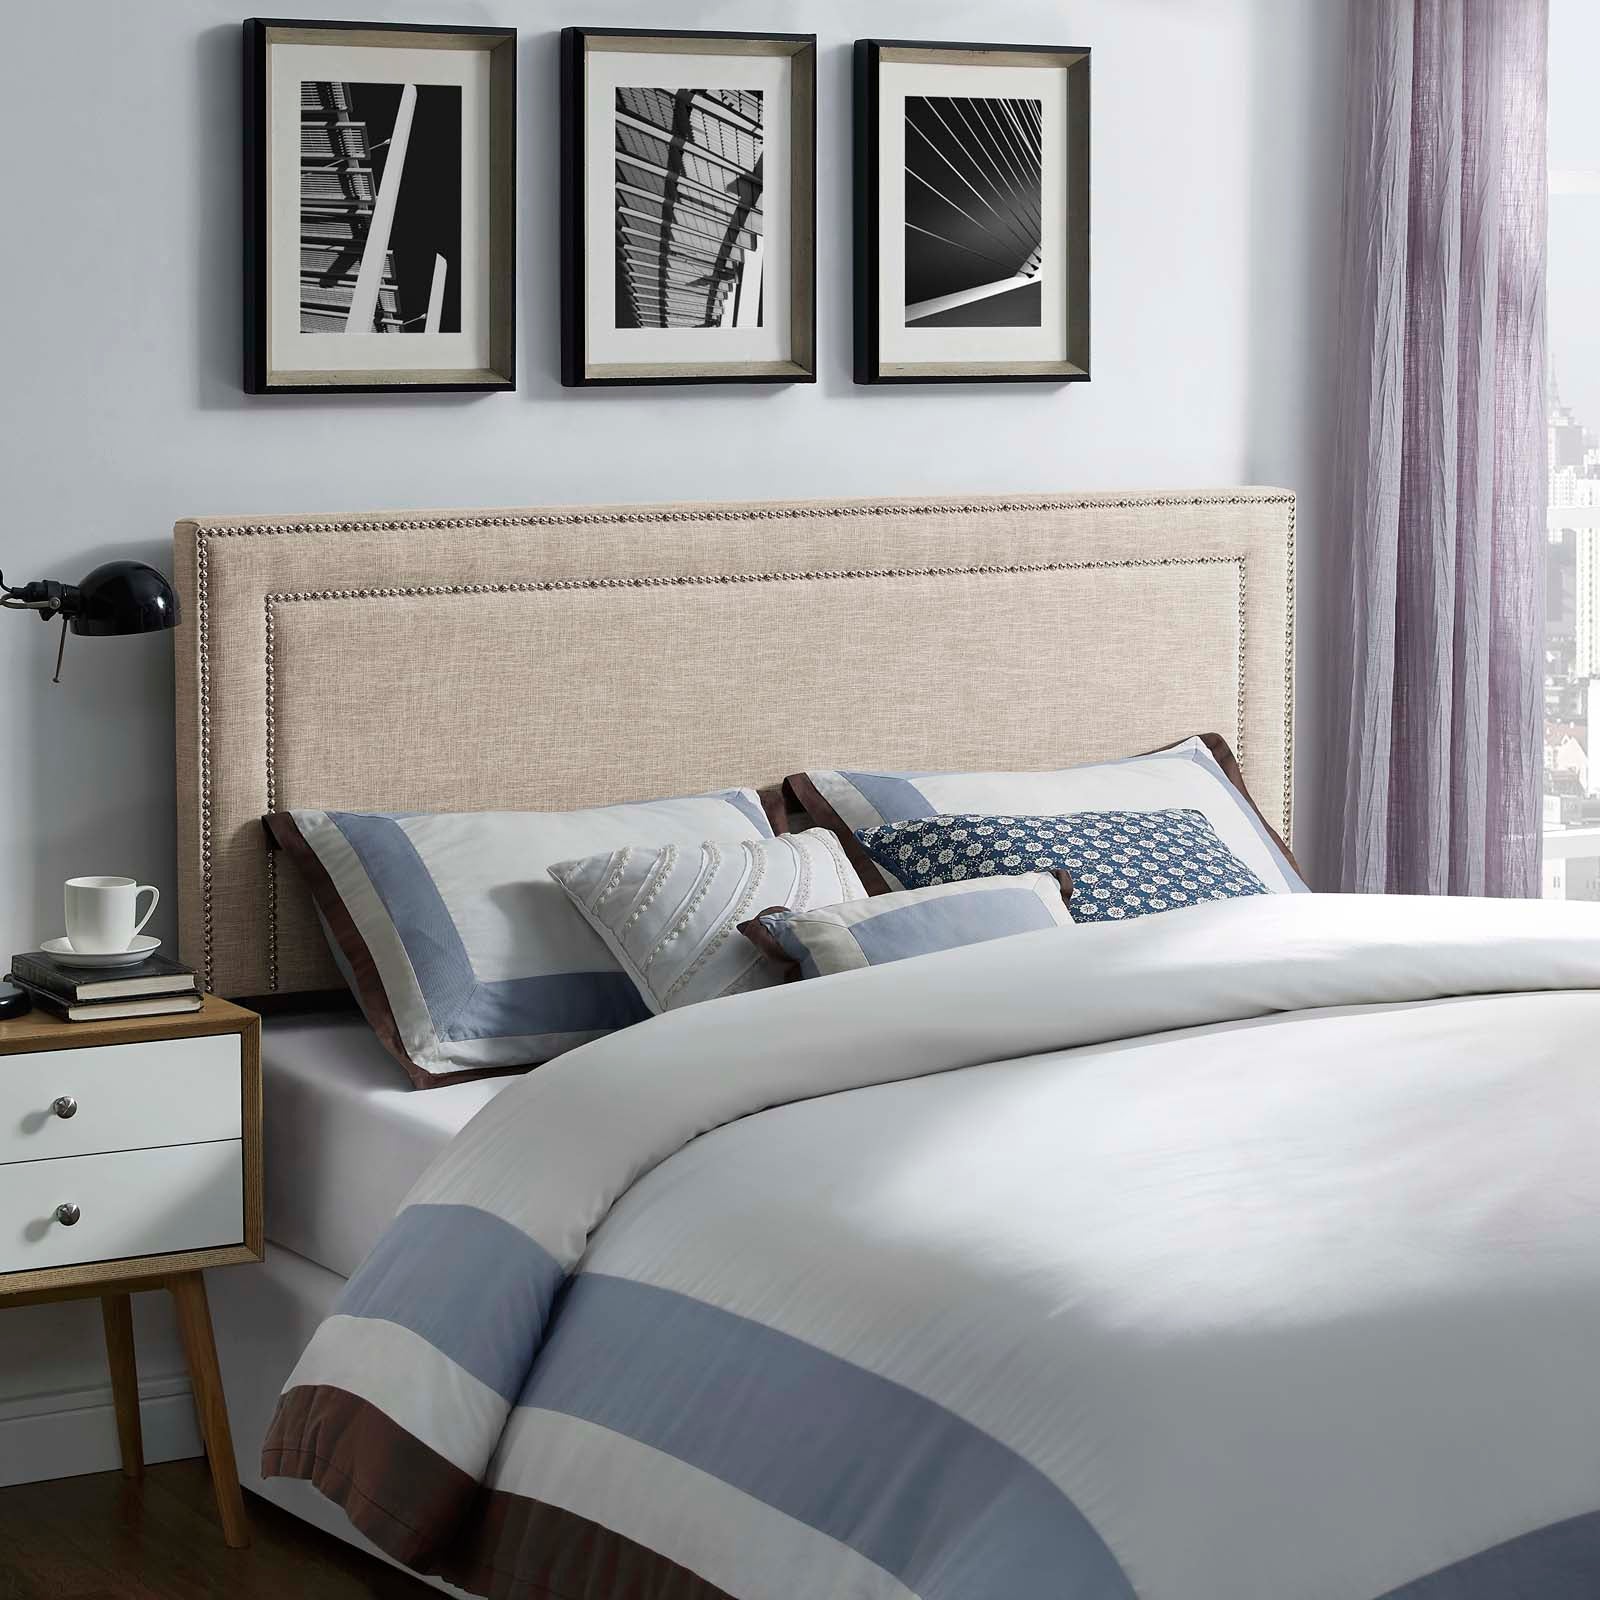 Jessamine Queen Upholstered Fabric Headboard - East Shore Modern Home Furnishings